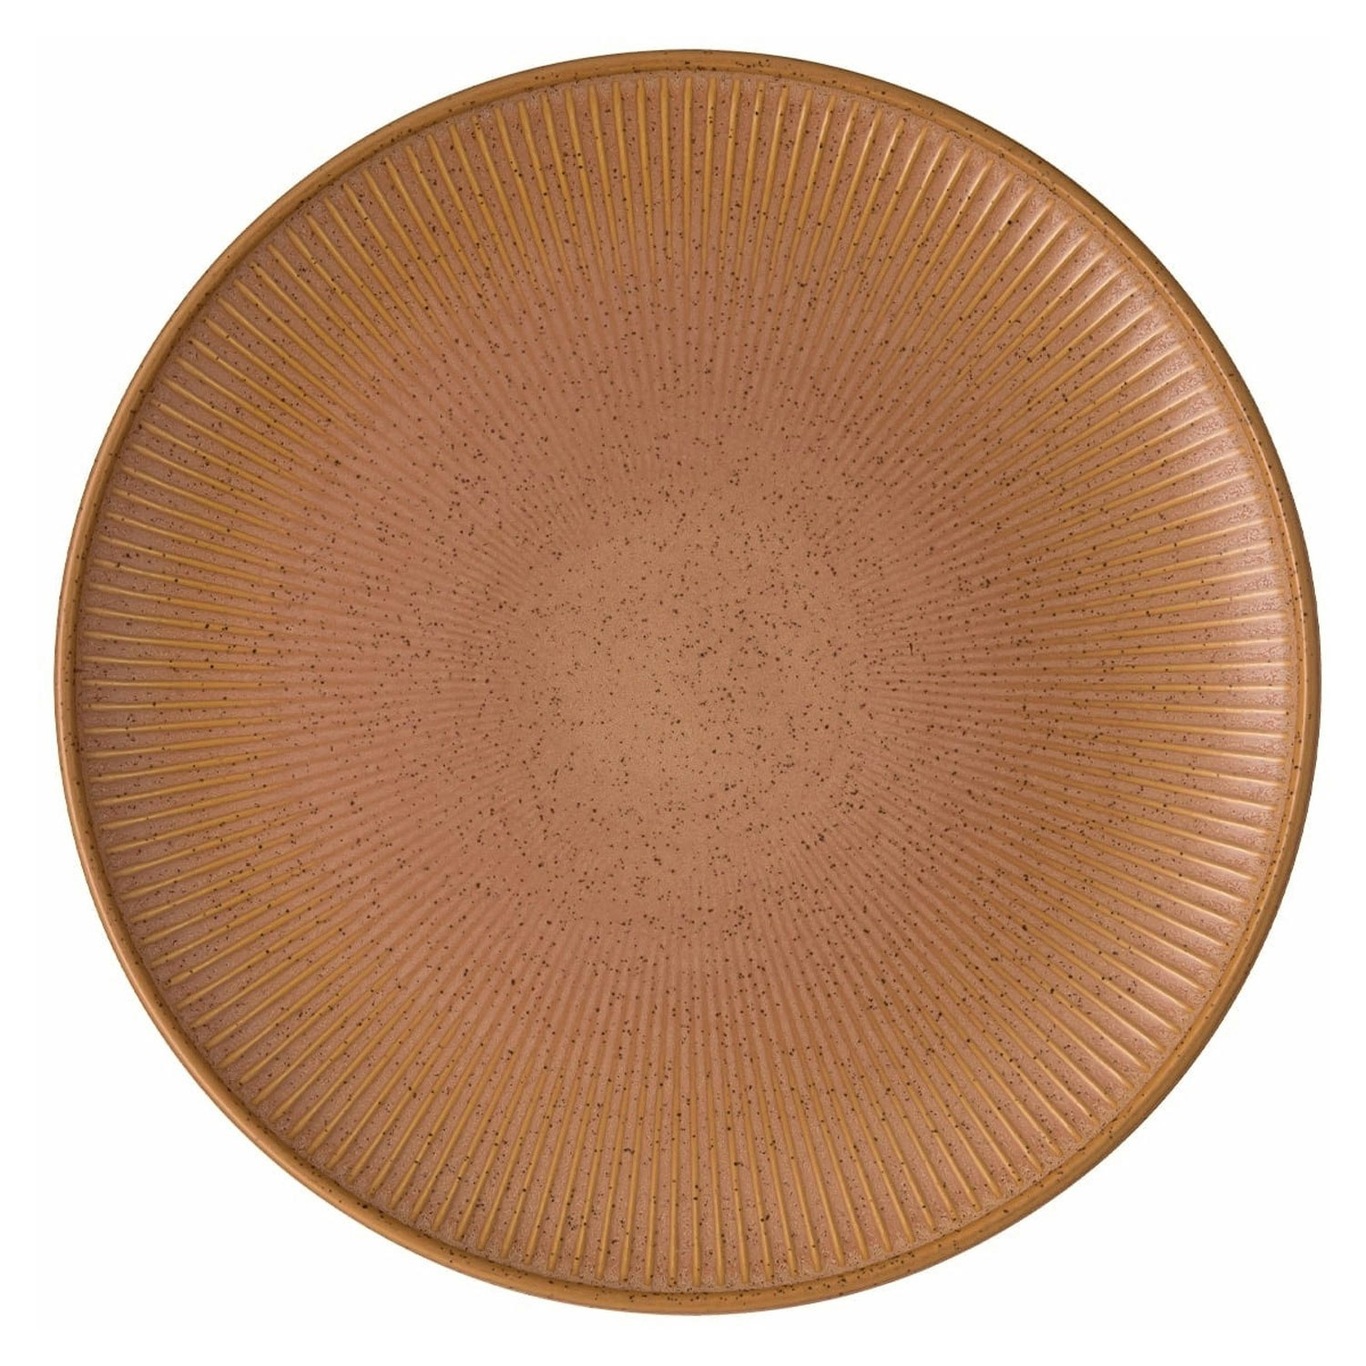 Thomas Clay Plate 27 cm, Earth